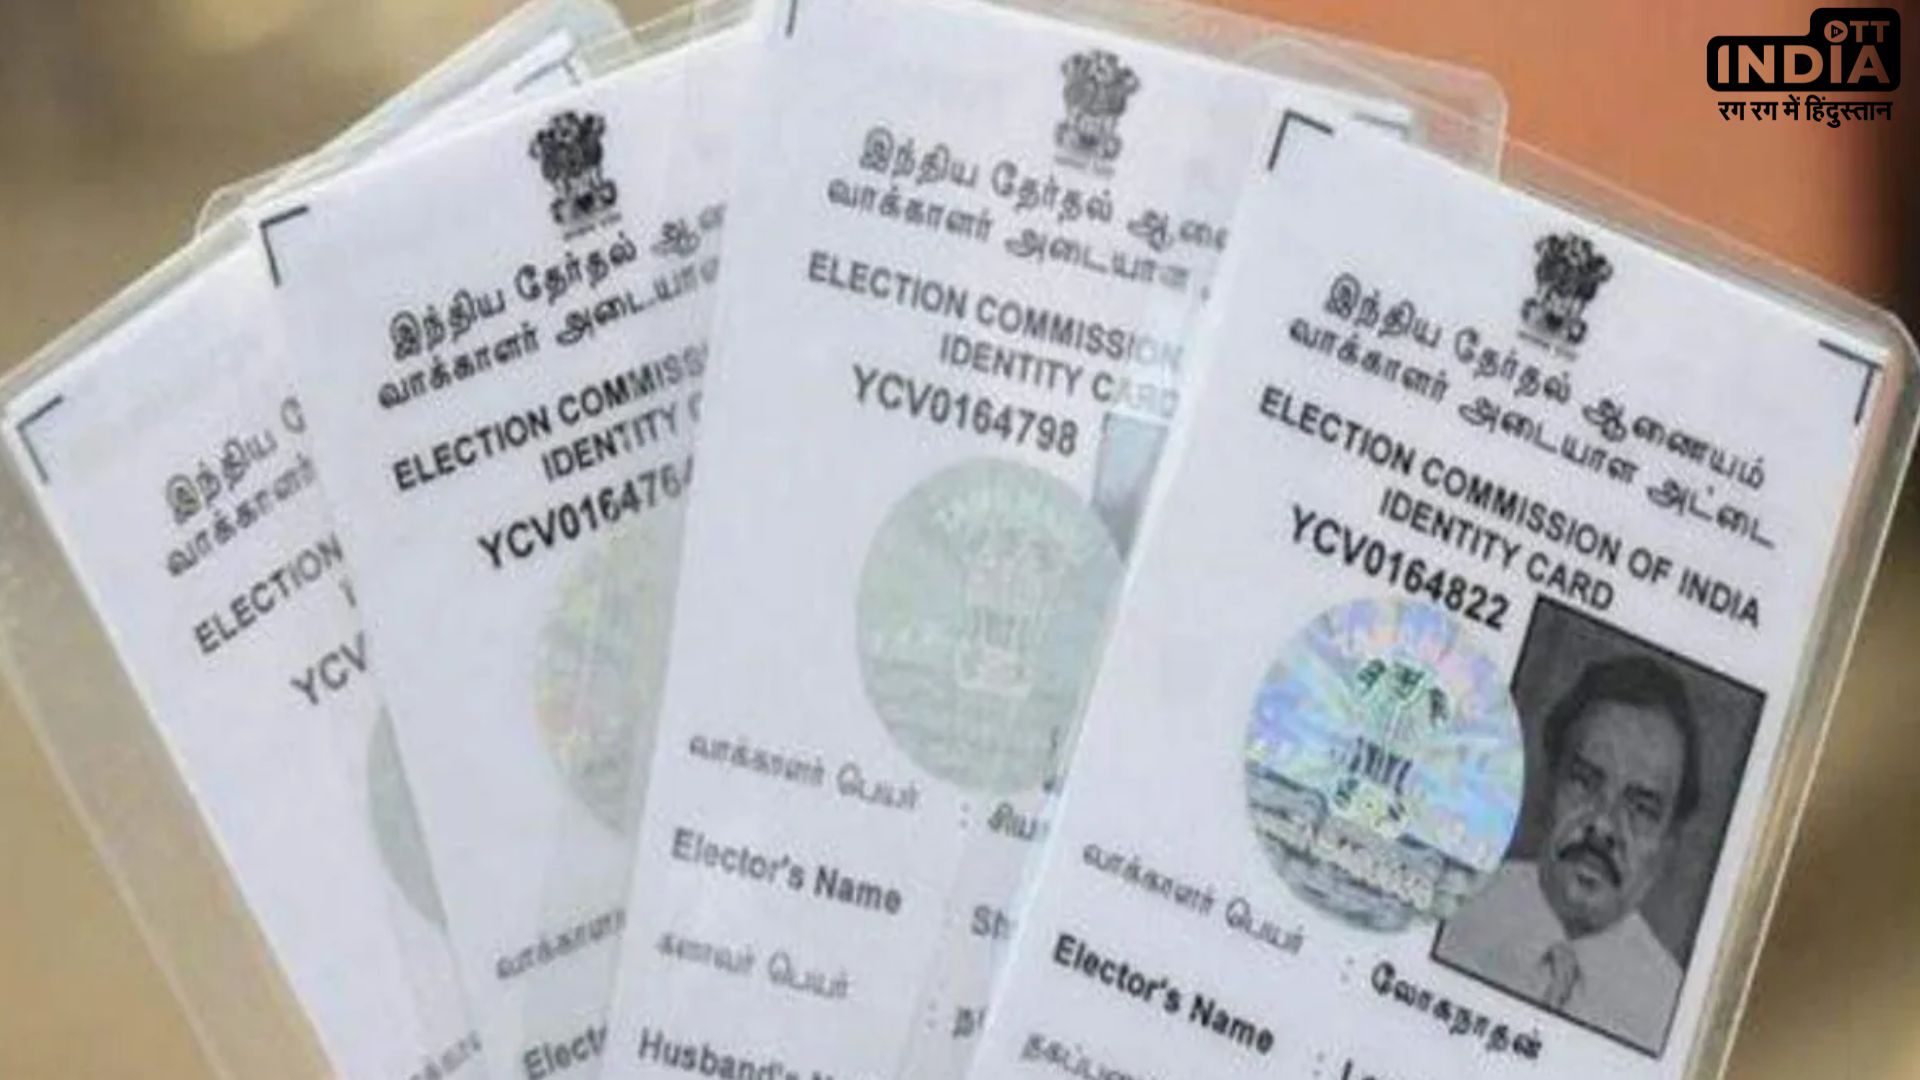 PVC Voter ID Card